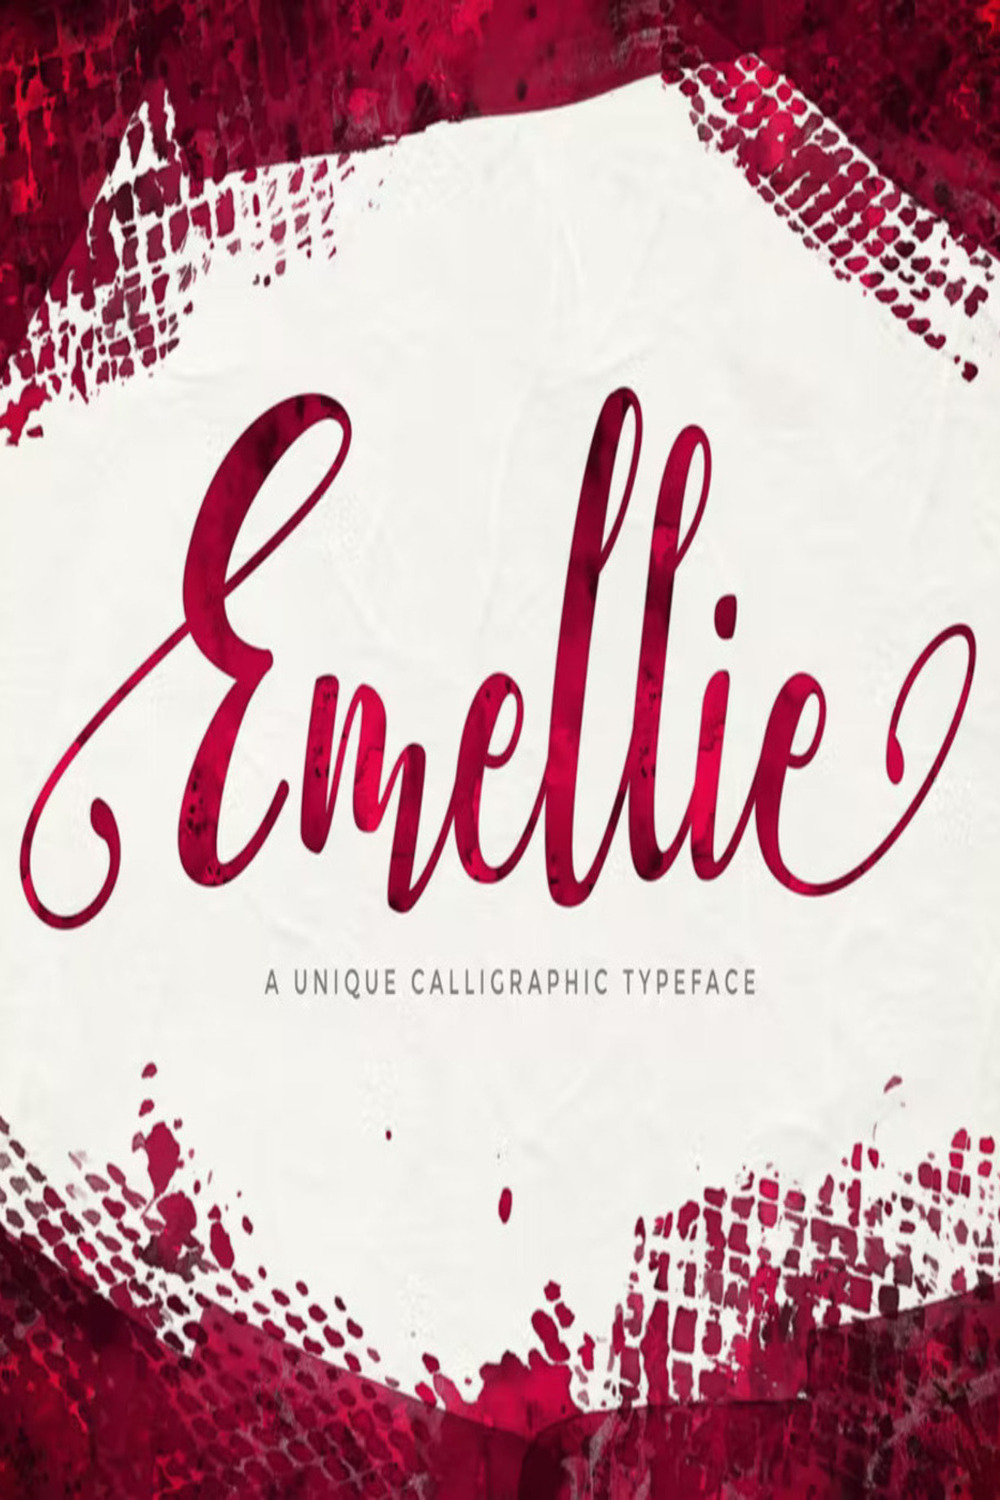 Emellie Calligraphic Font pinterest.